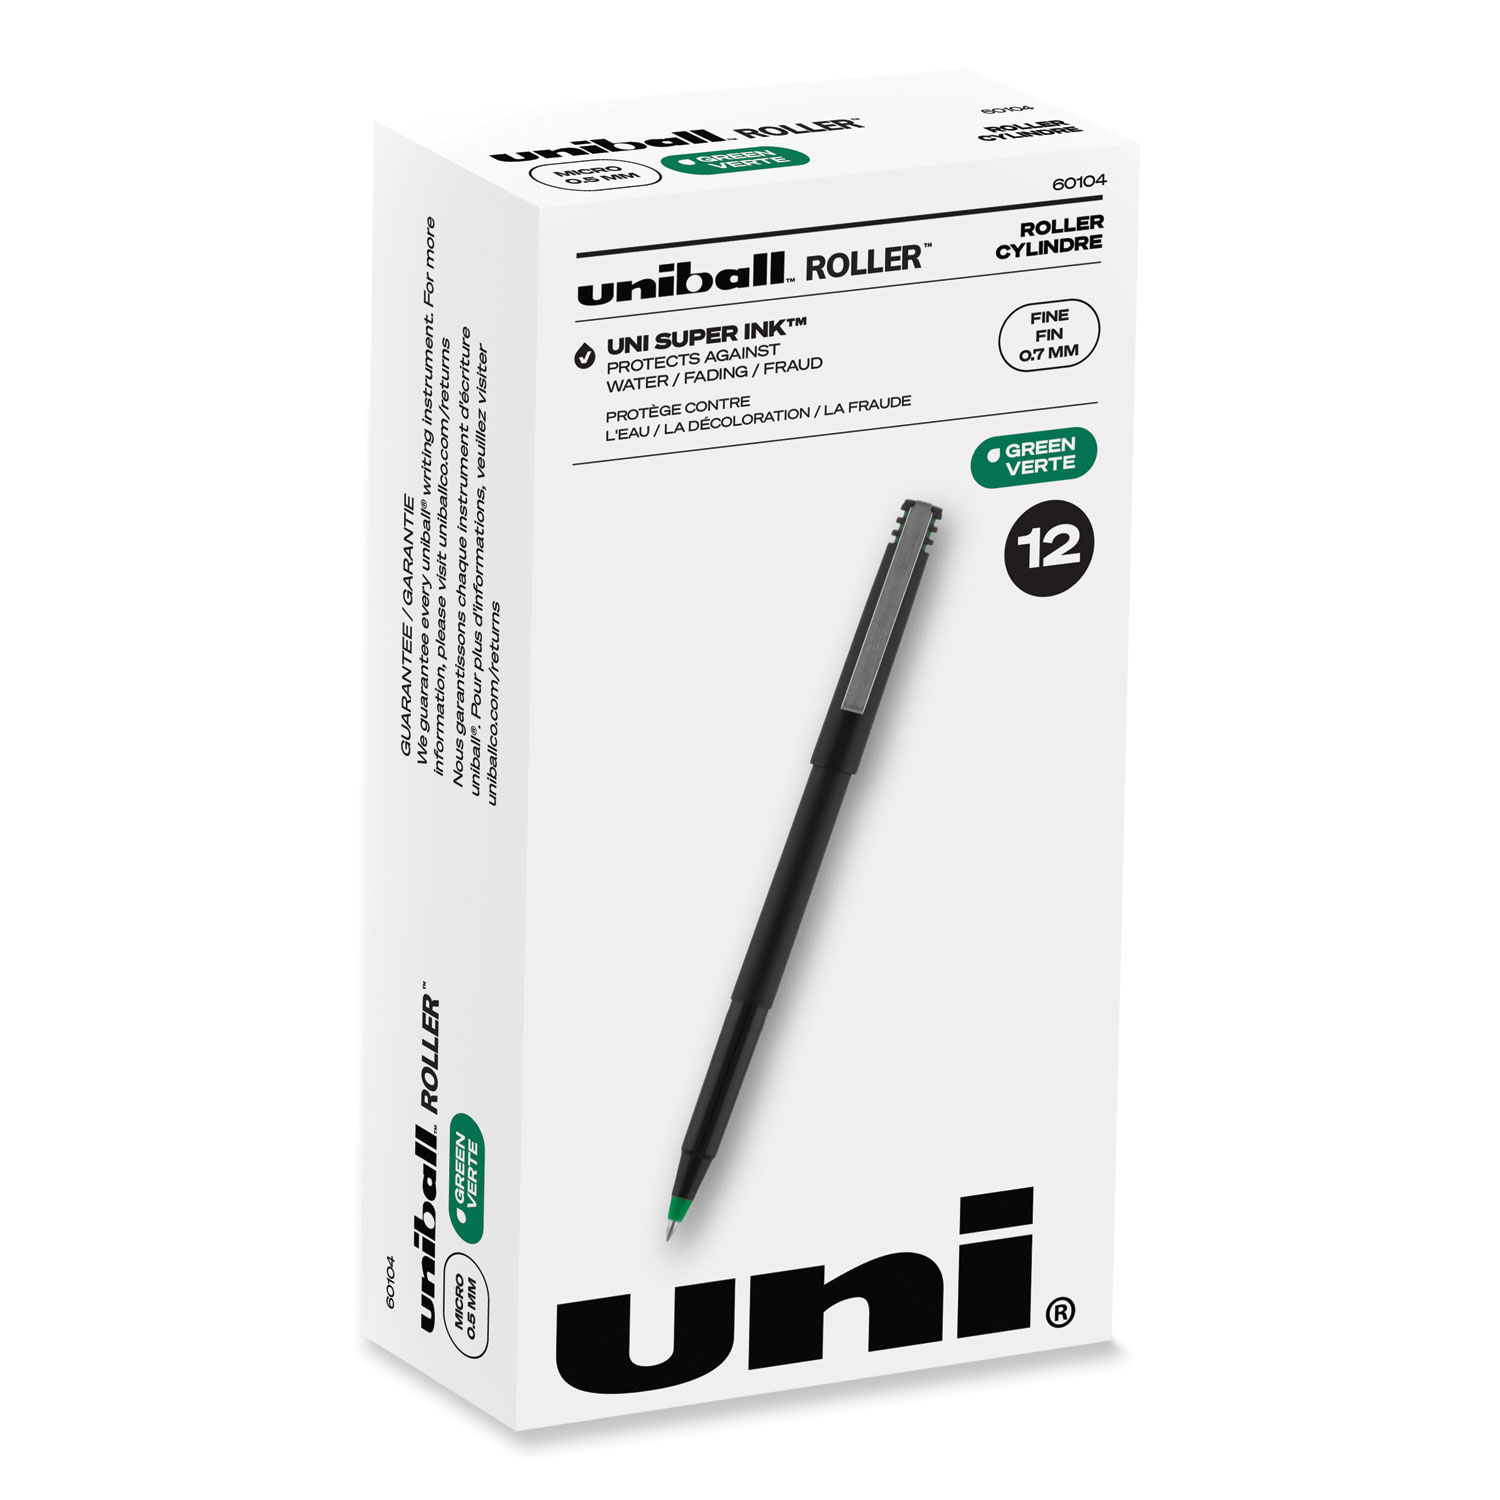 Roller Ball Pen by uni-ballandreg; UBC60104